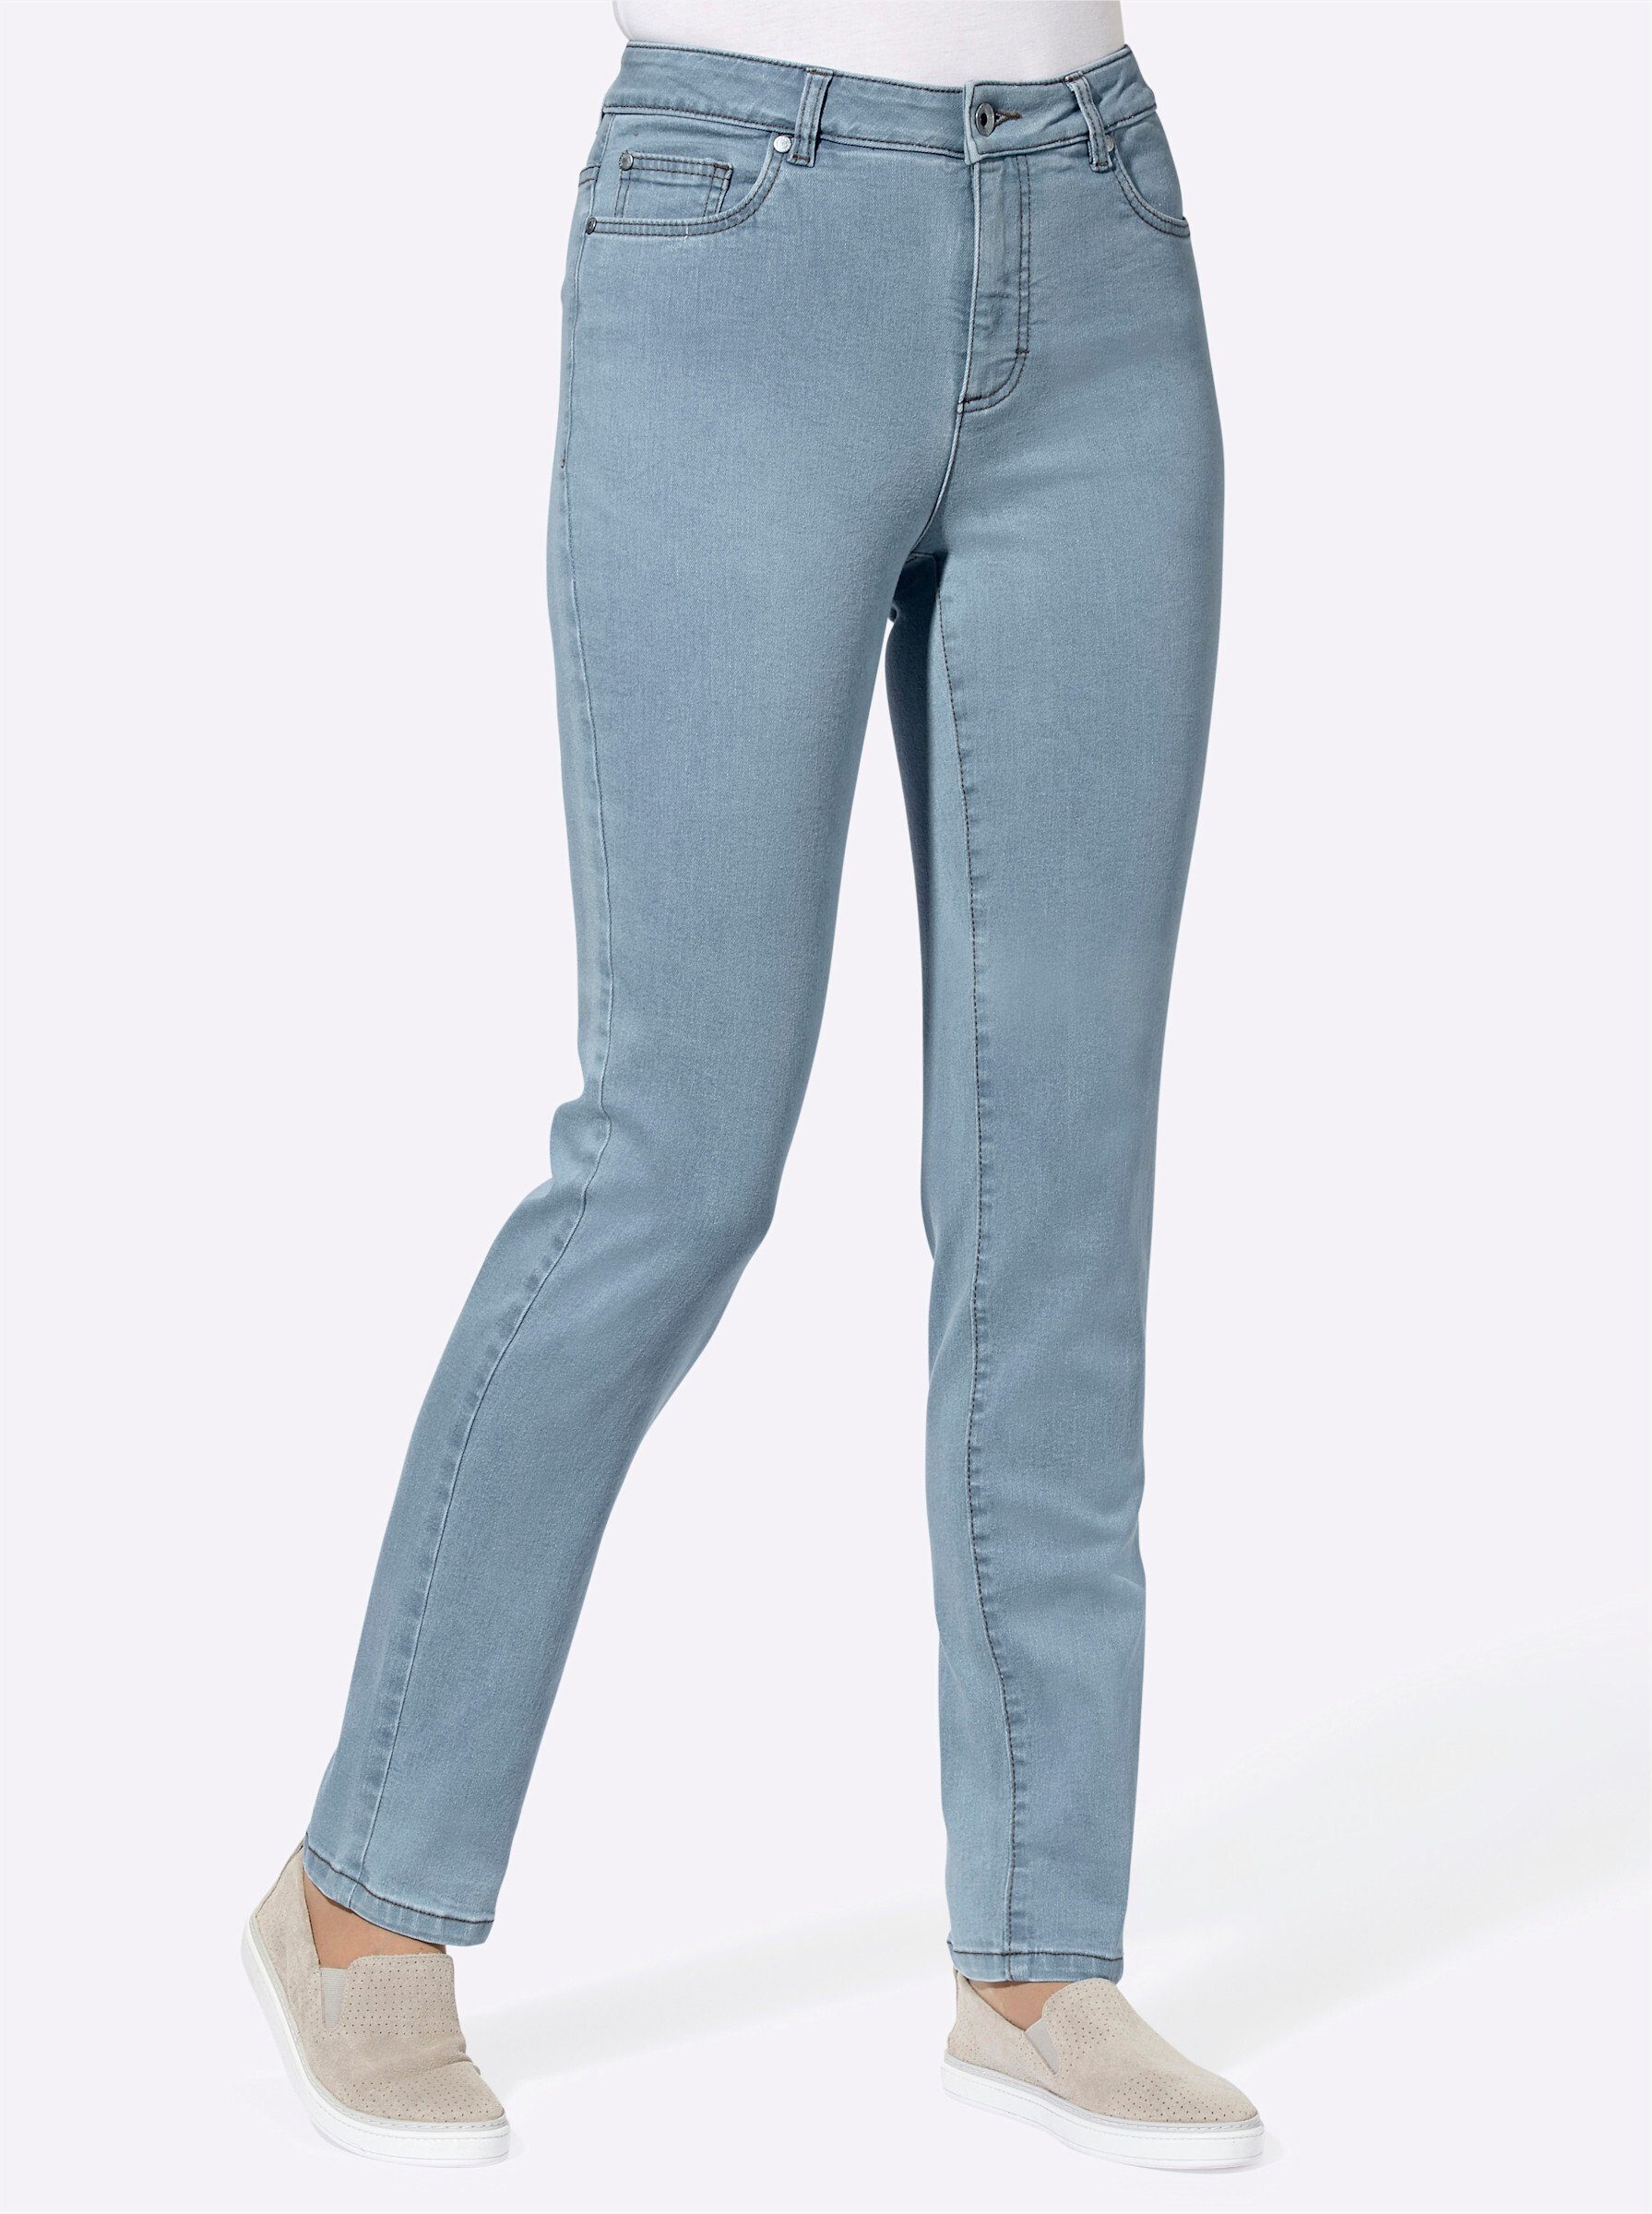 WITT WEIDEN Bequeme Jeans hellblau | Slim-Fit Jeans